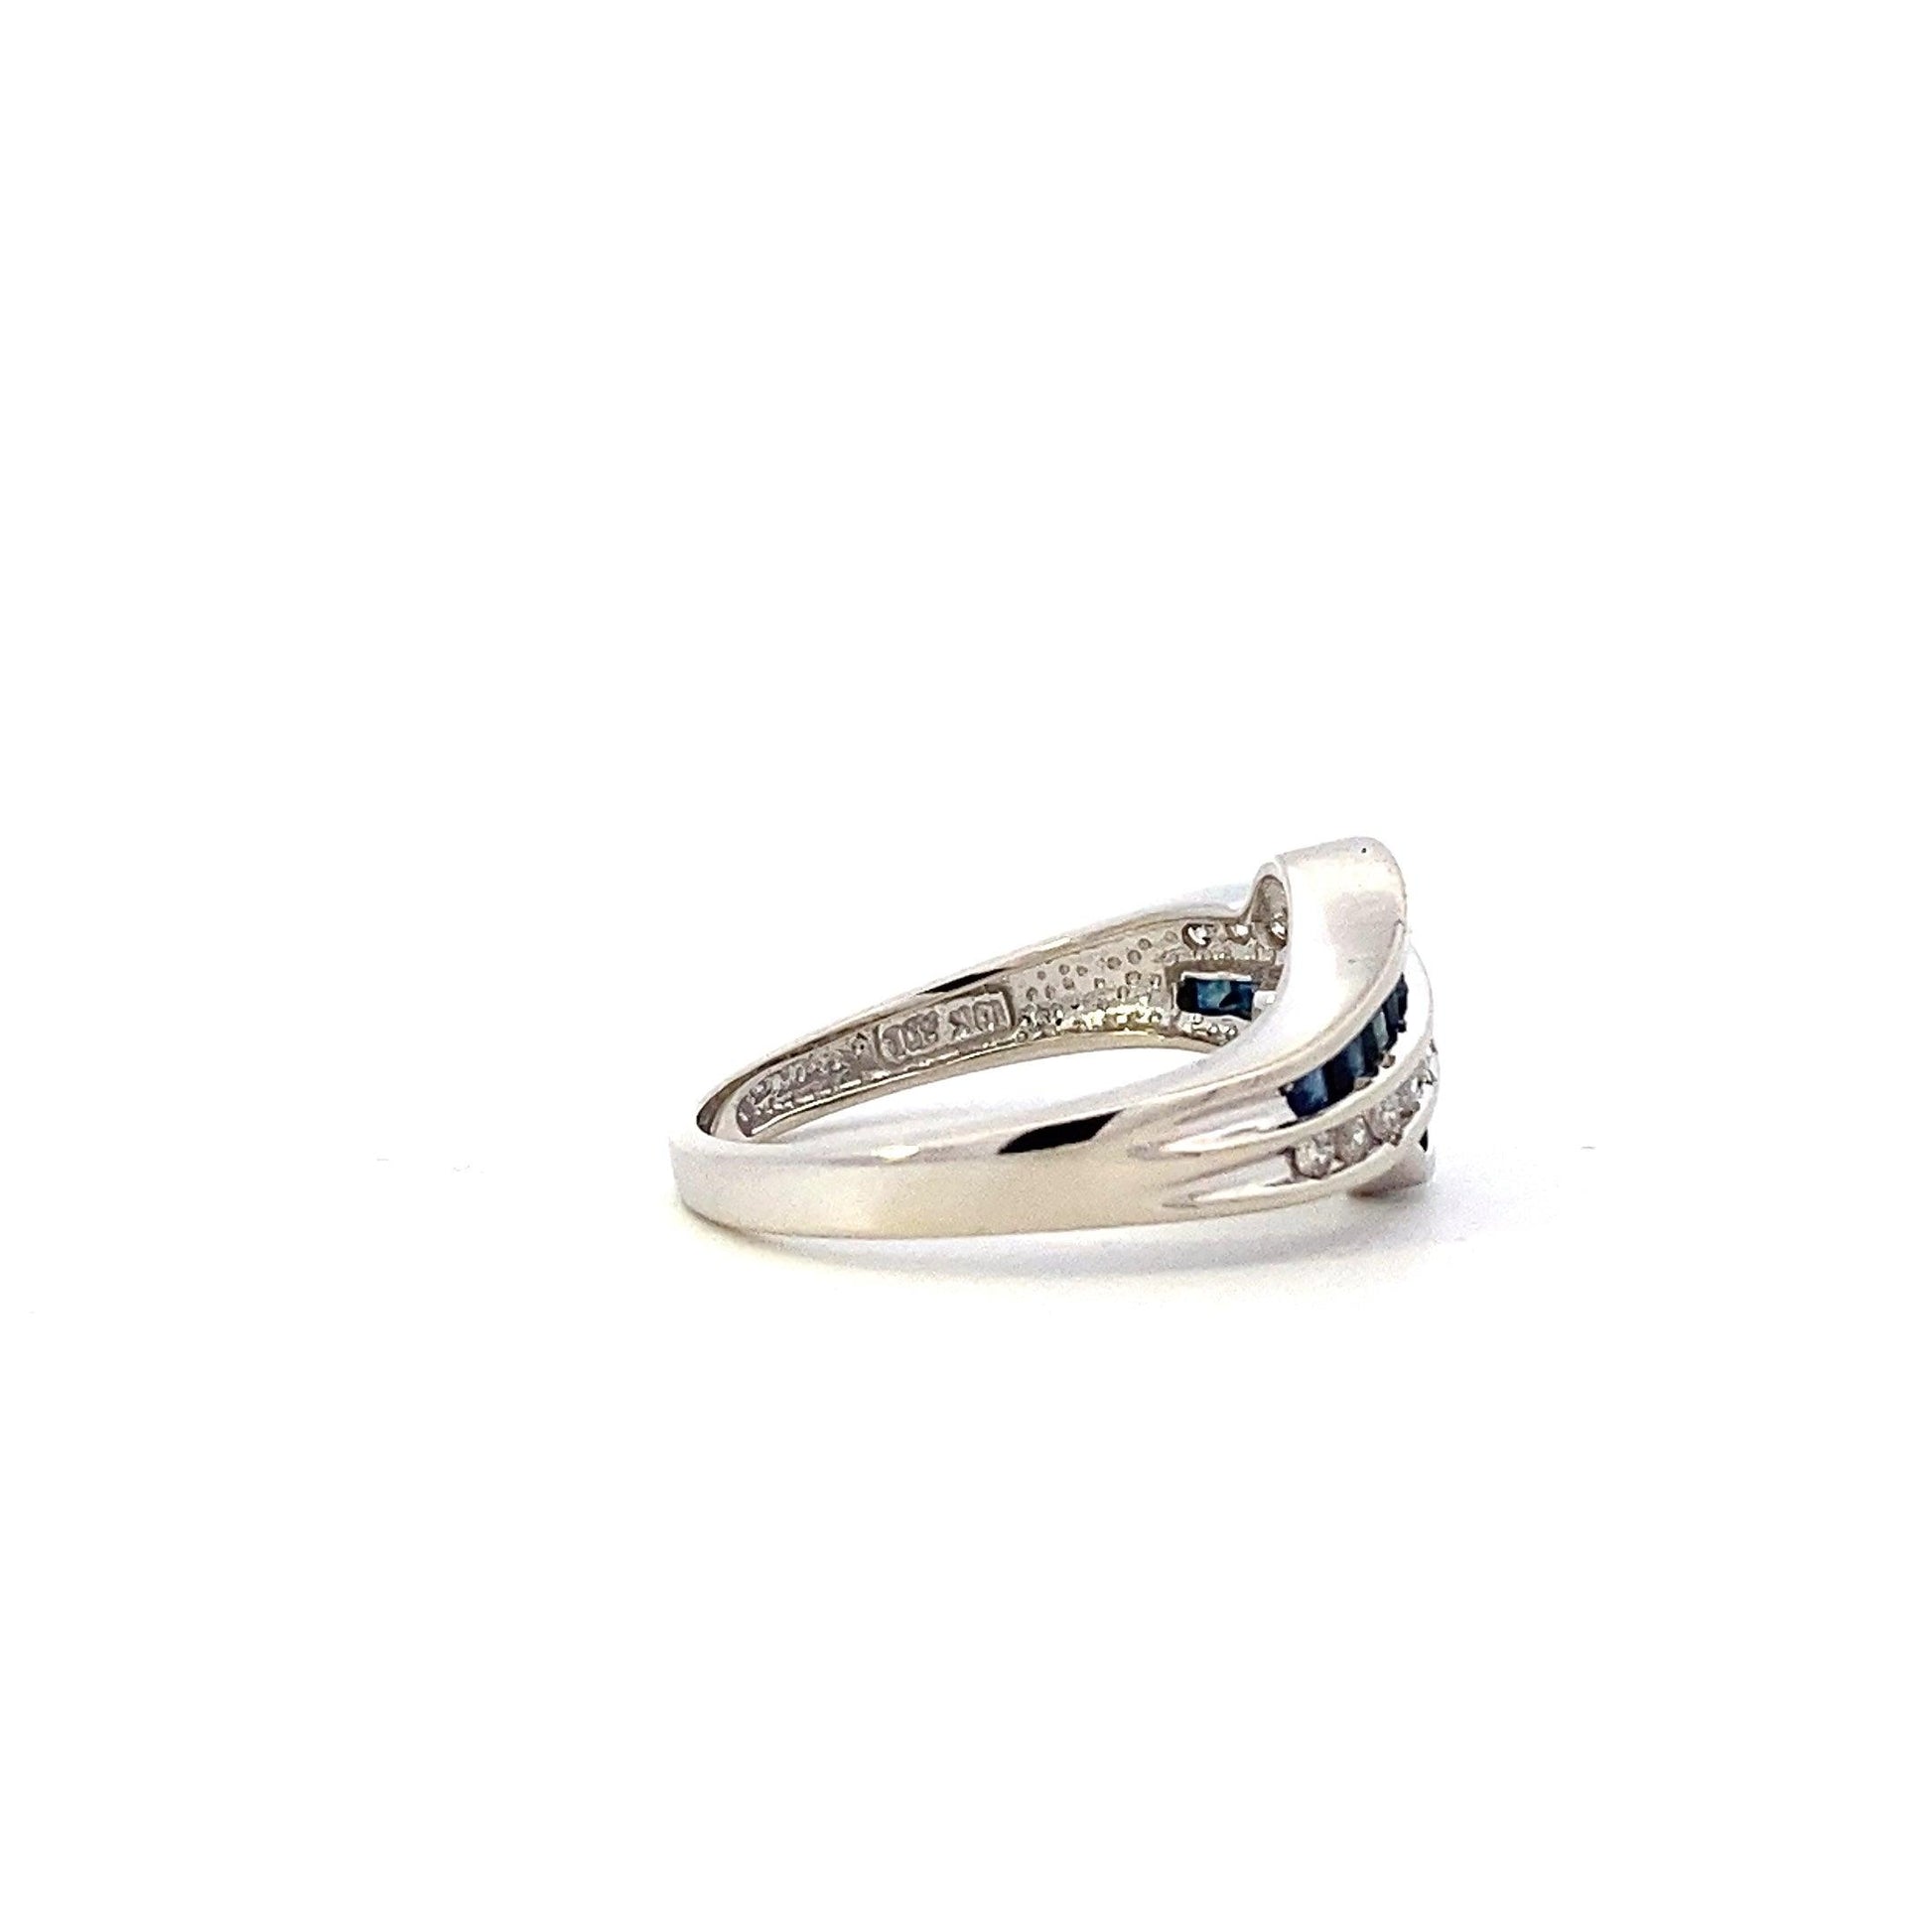 10K White Gold & Sapphire Women's Diamond Ring - 0.17ct - ipawnishop.com